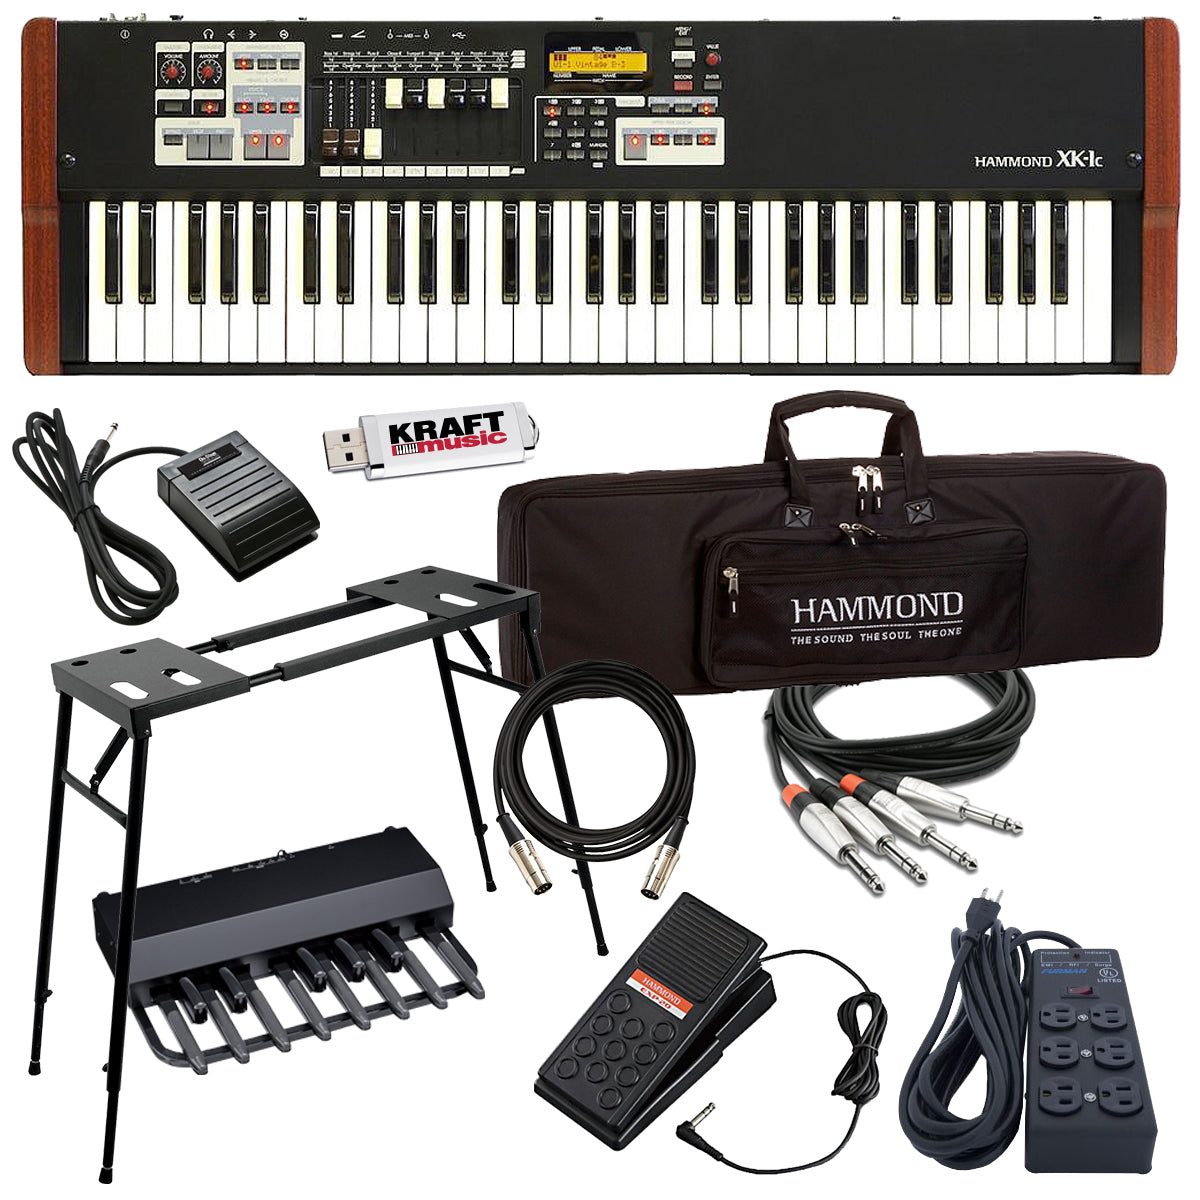 Hammond XK-1c Portable Organ ULTRA BUNDLE